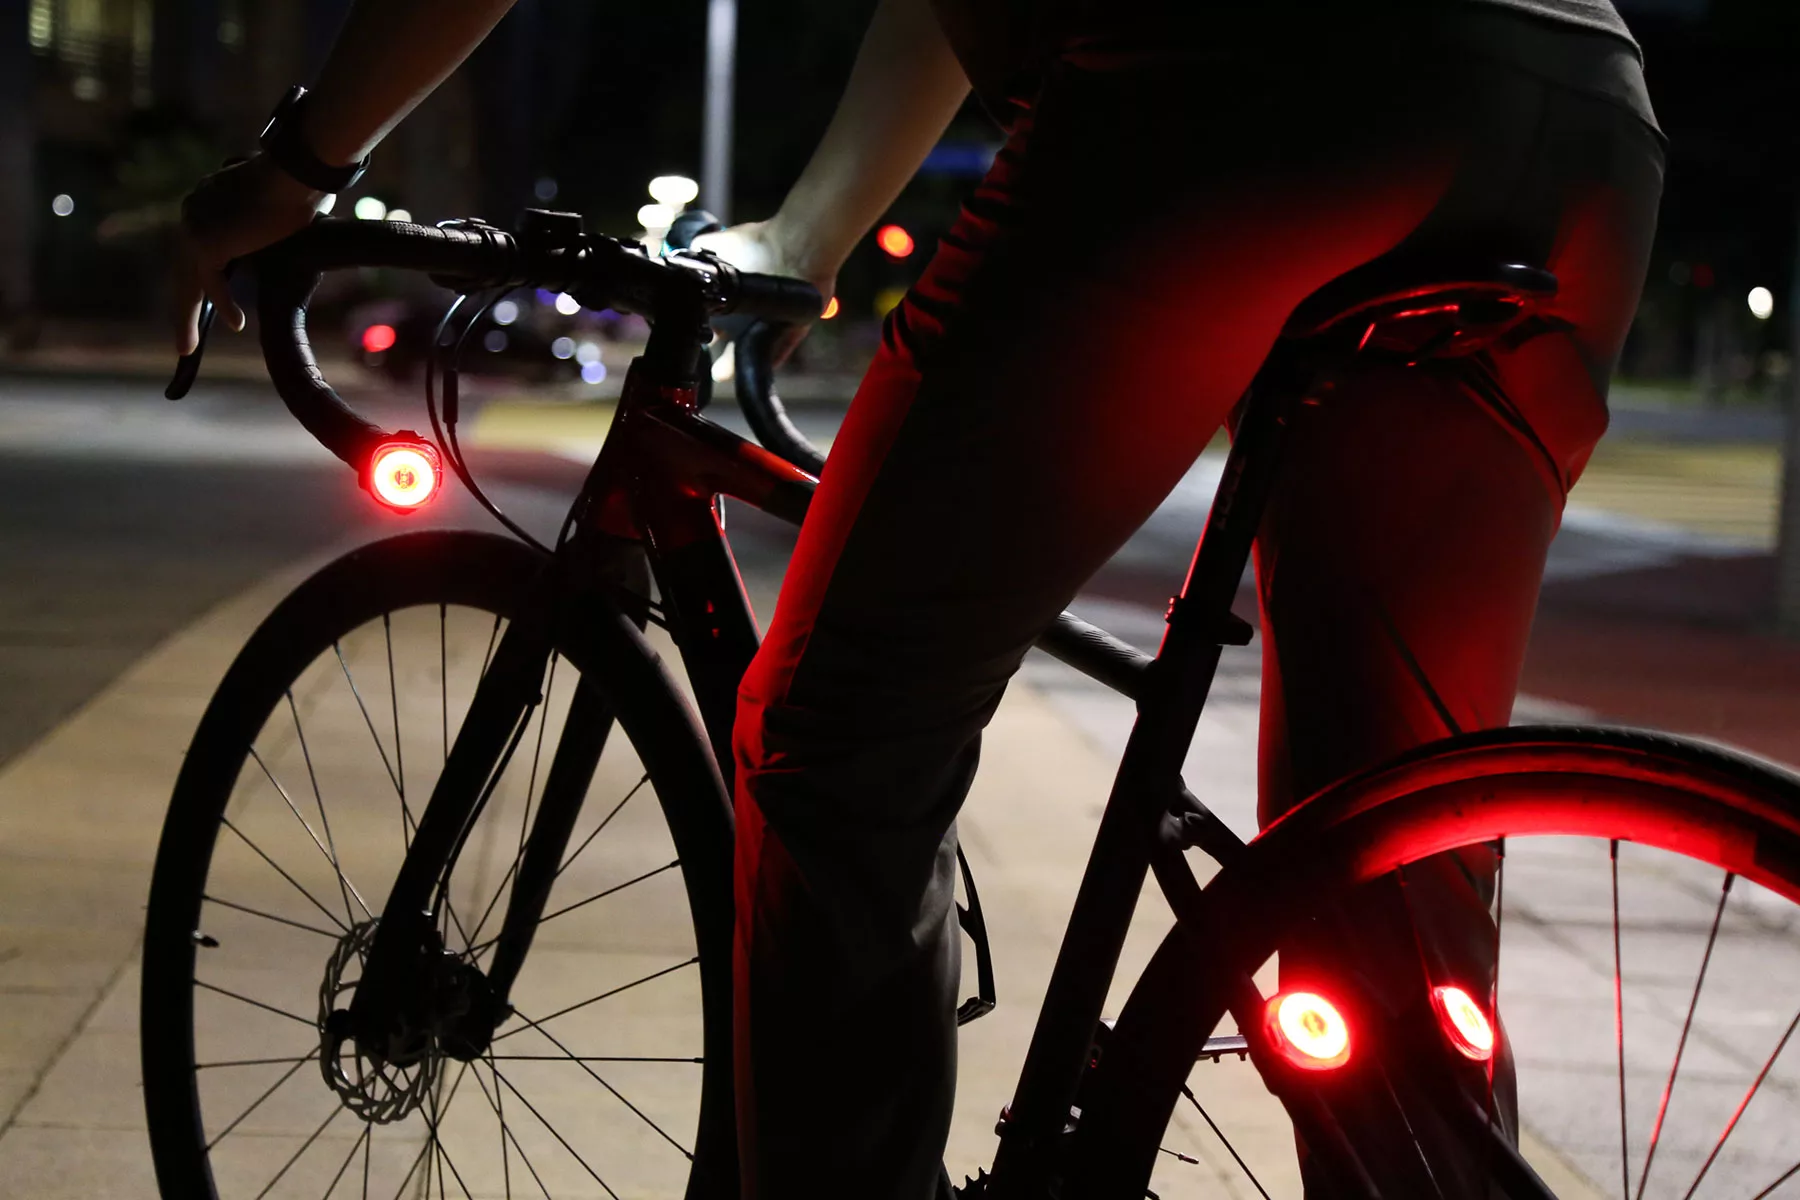 Firefly 4-in-1 bike lights adaptively boost visibility - Bikerumor